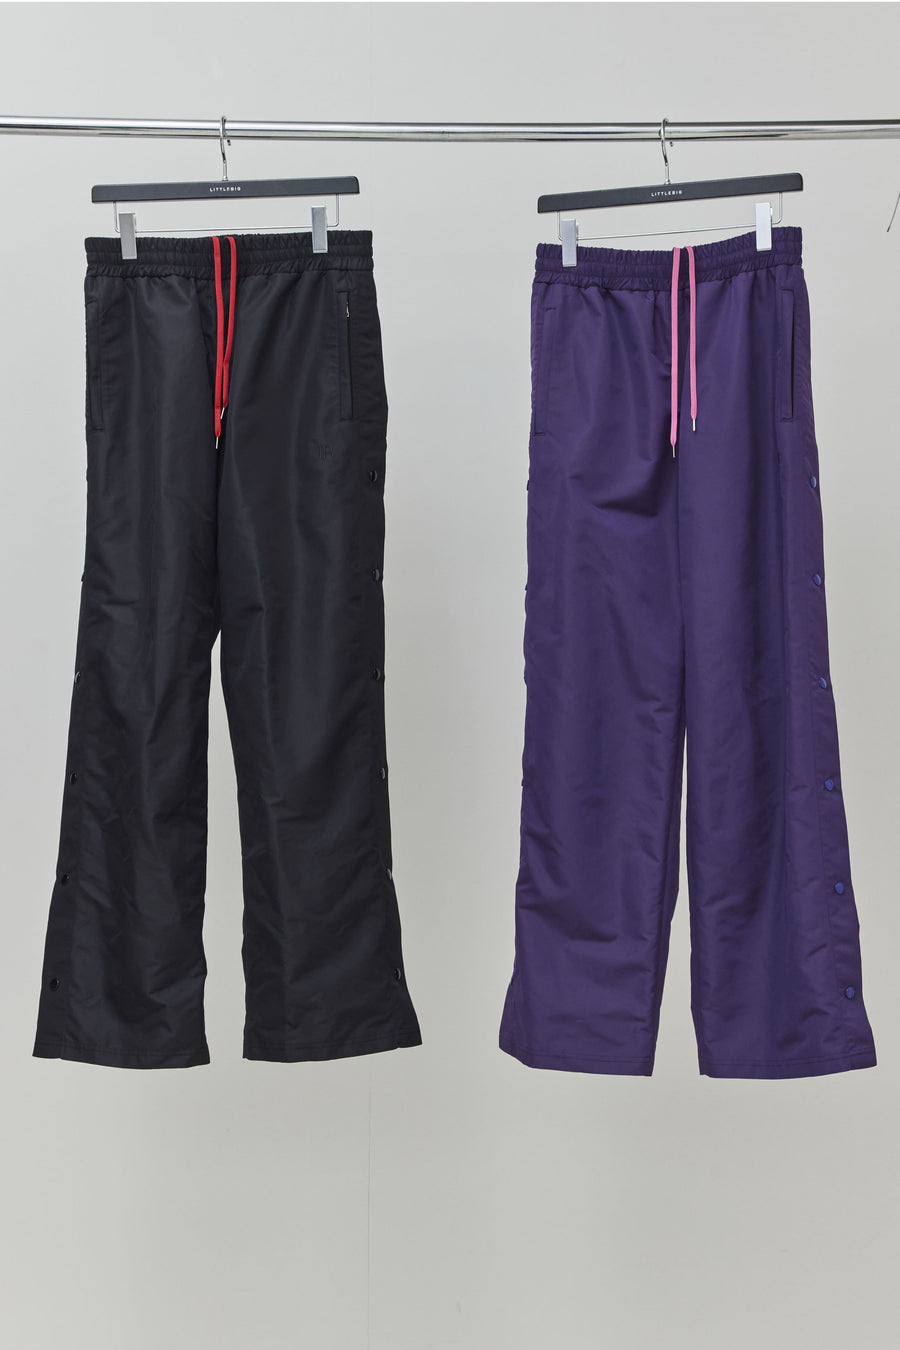 LITTLEBIG  Nylon Track Pants(Purple)